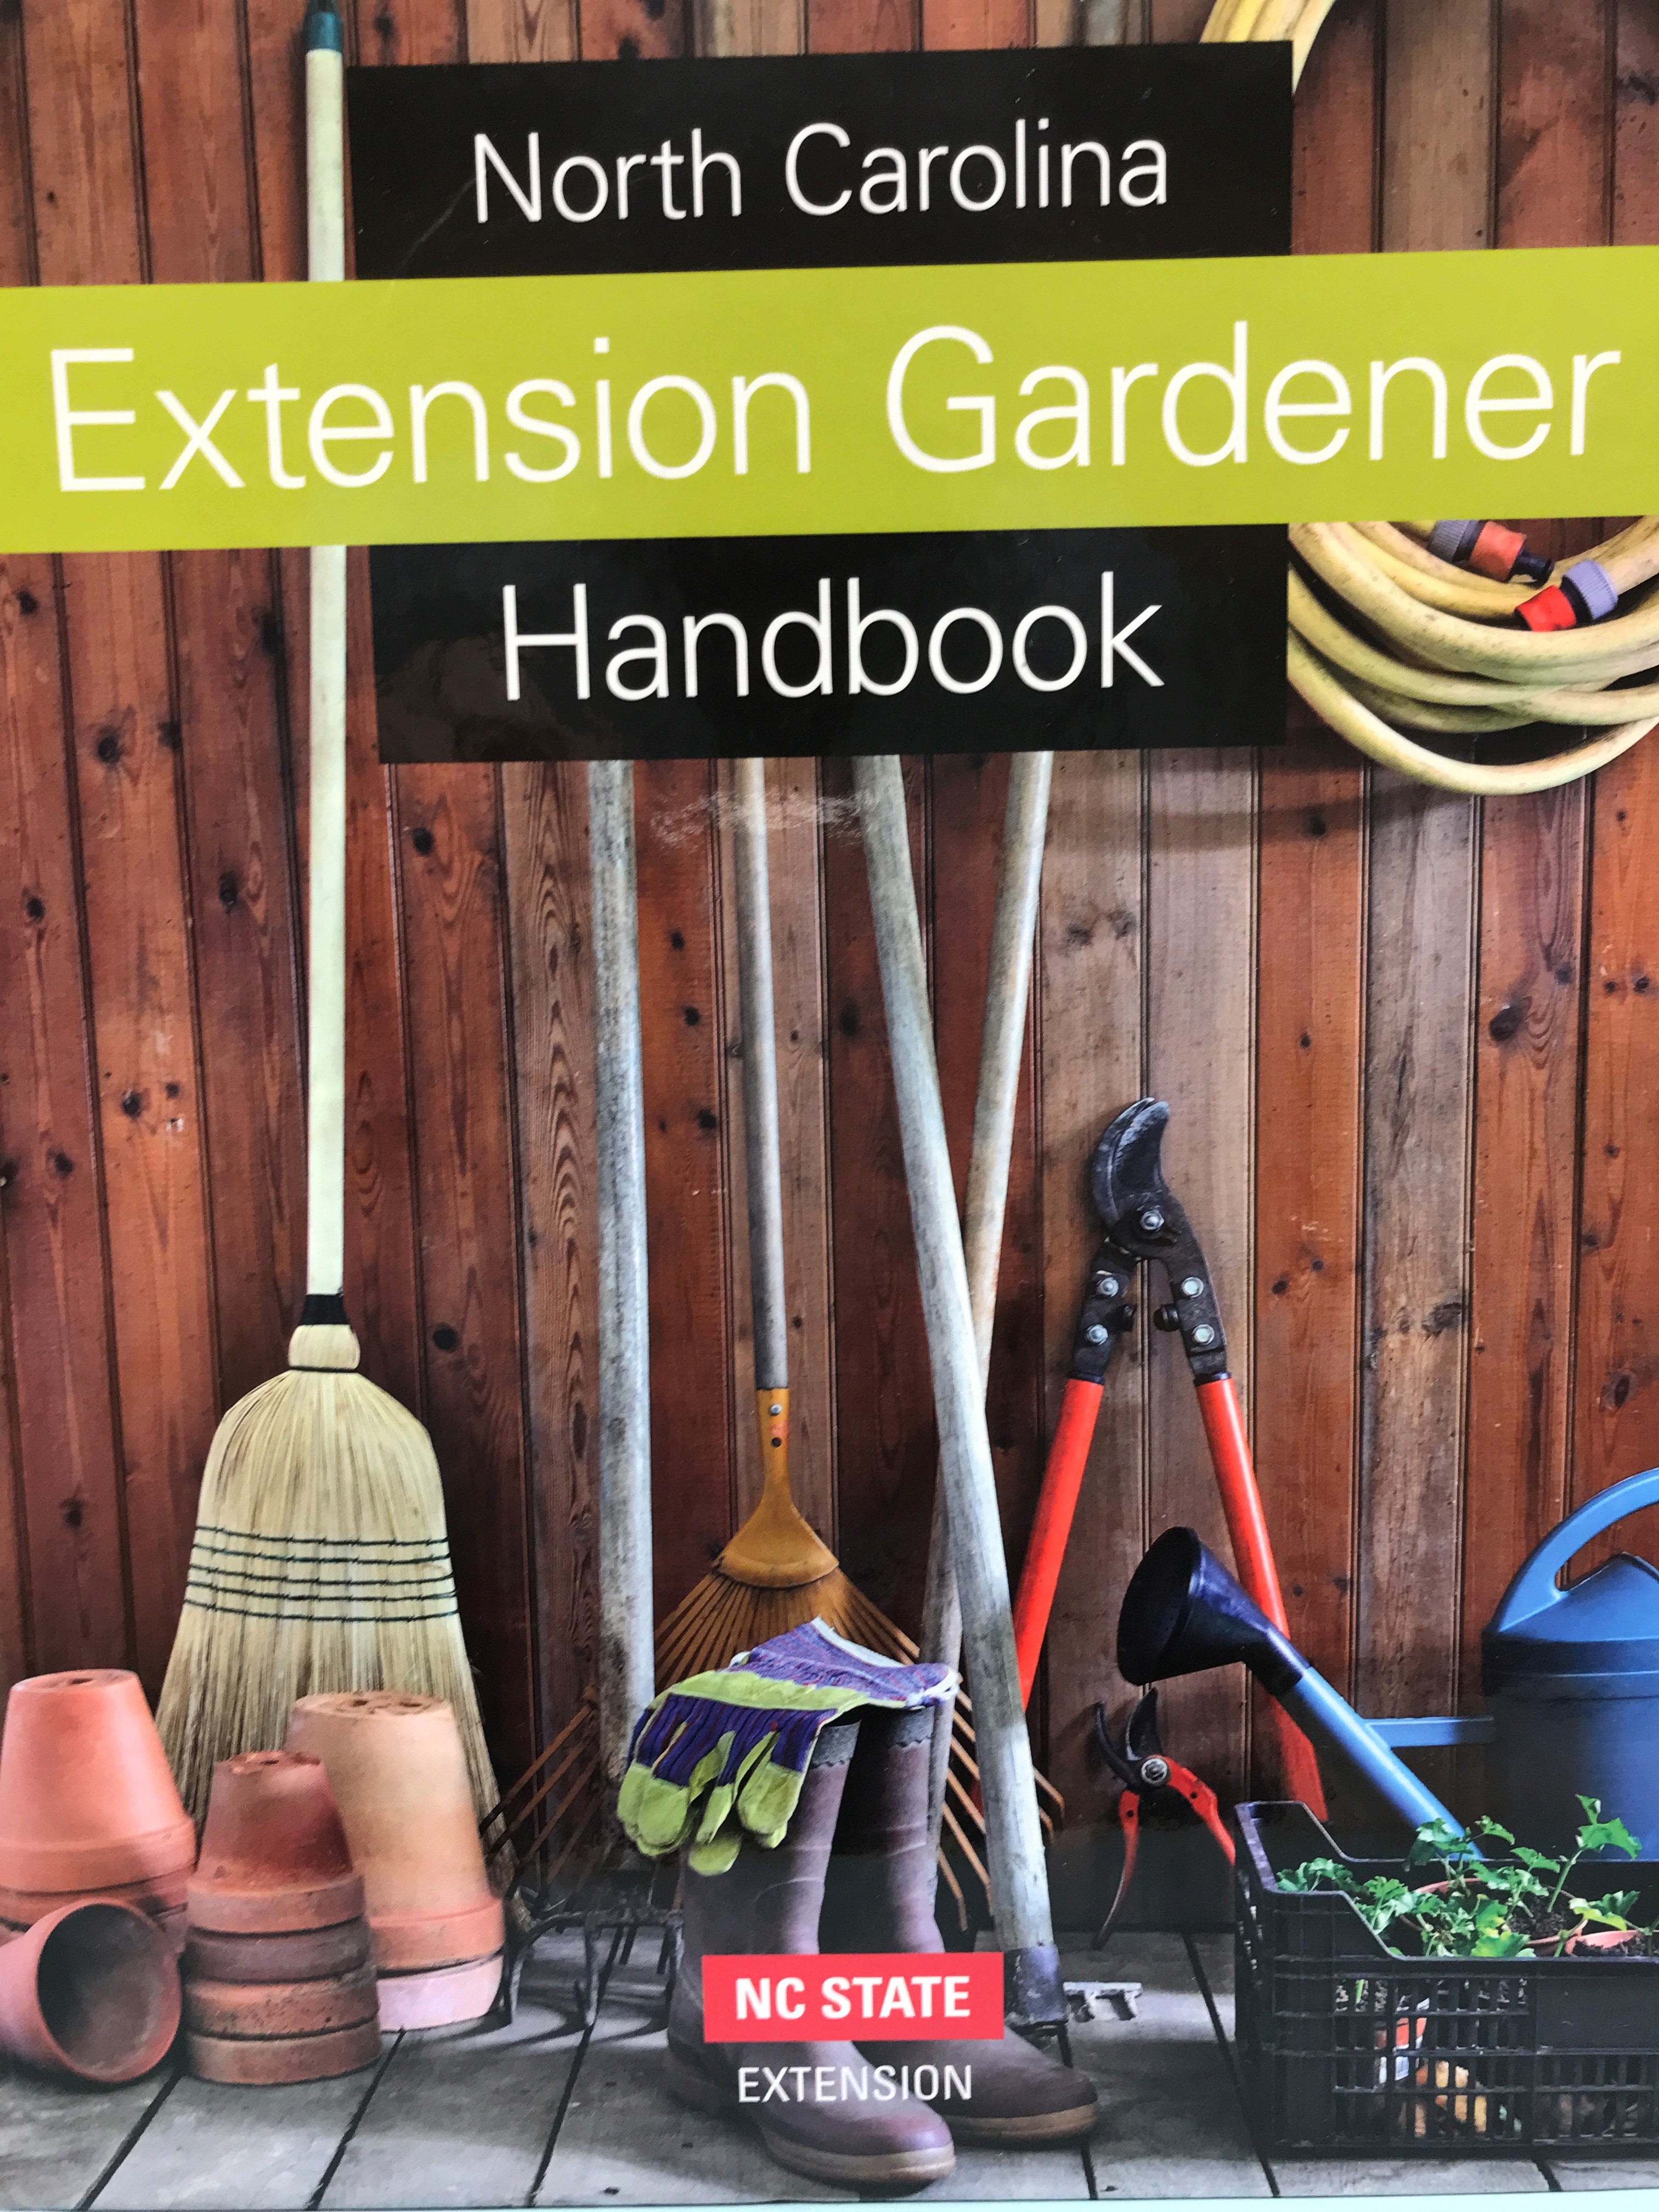 Extension Gardener Handbook cover